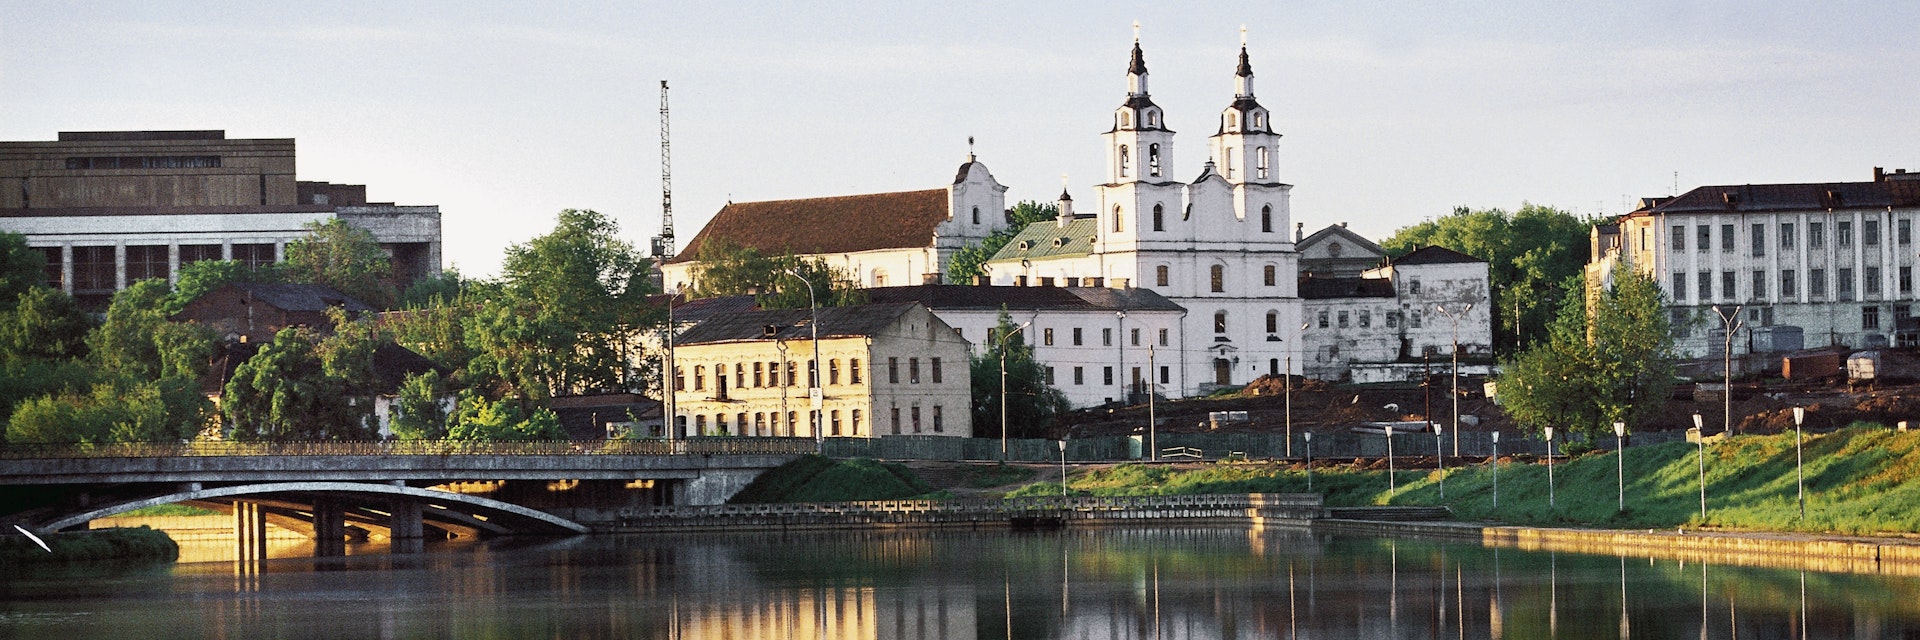 Holy Spirit cathedral, 1642-1687, Minsk, Belarus, 17th century